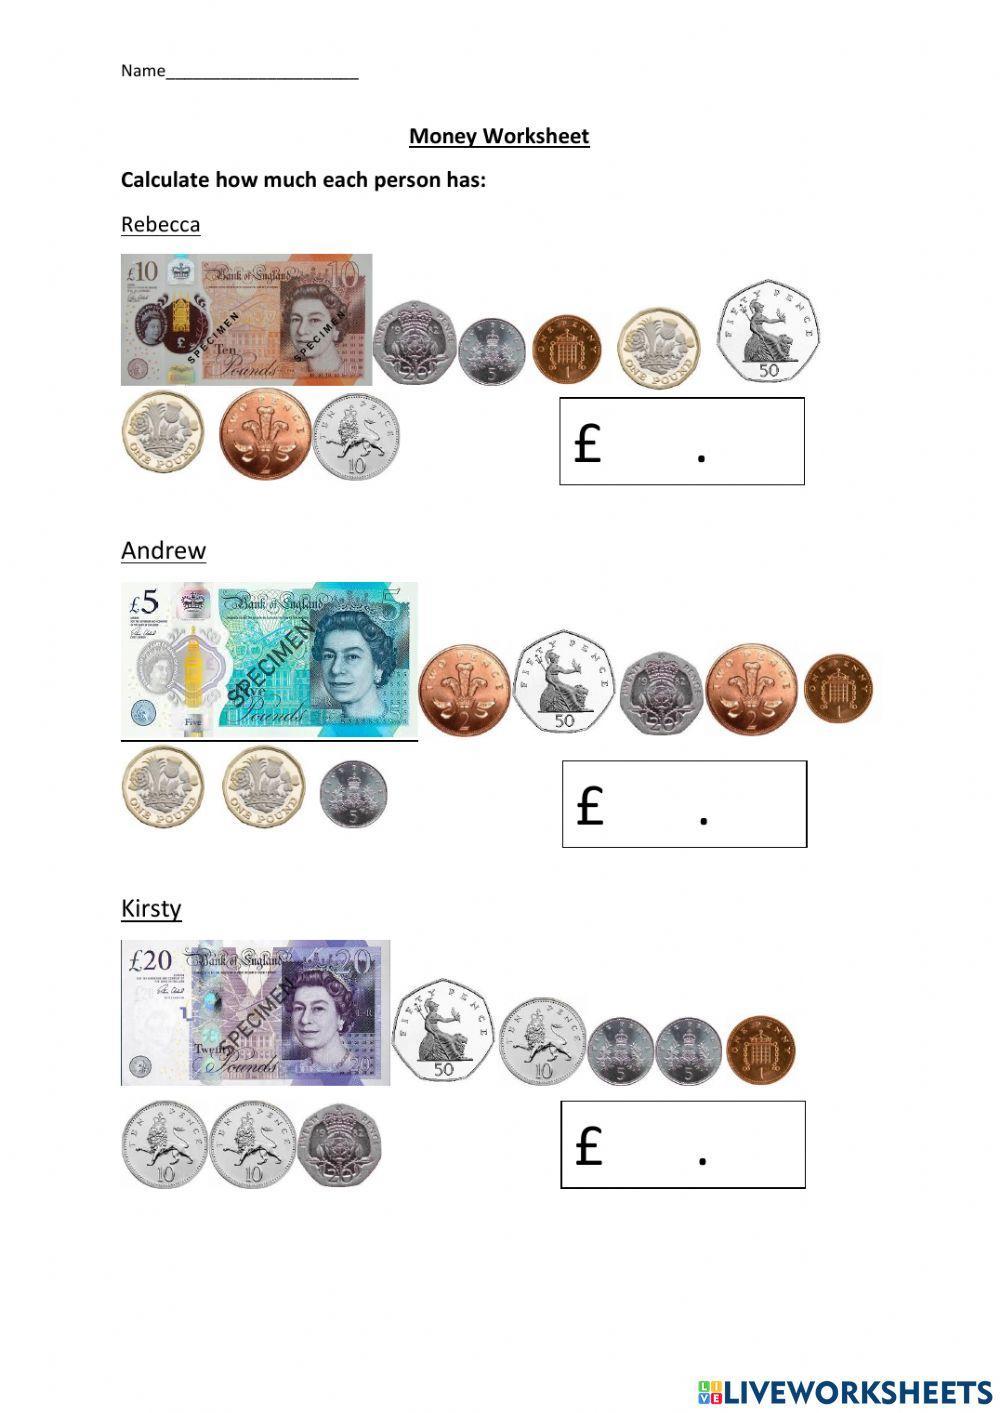 Adding UK pounds and pence